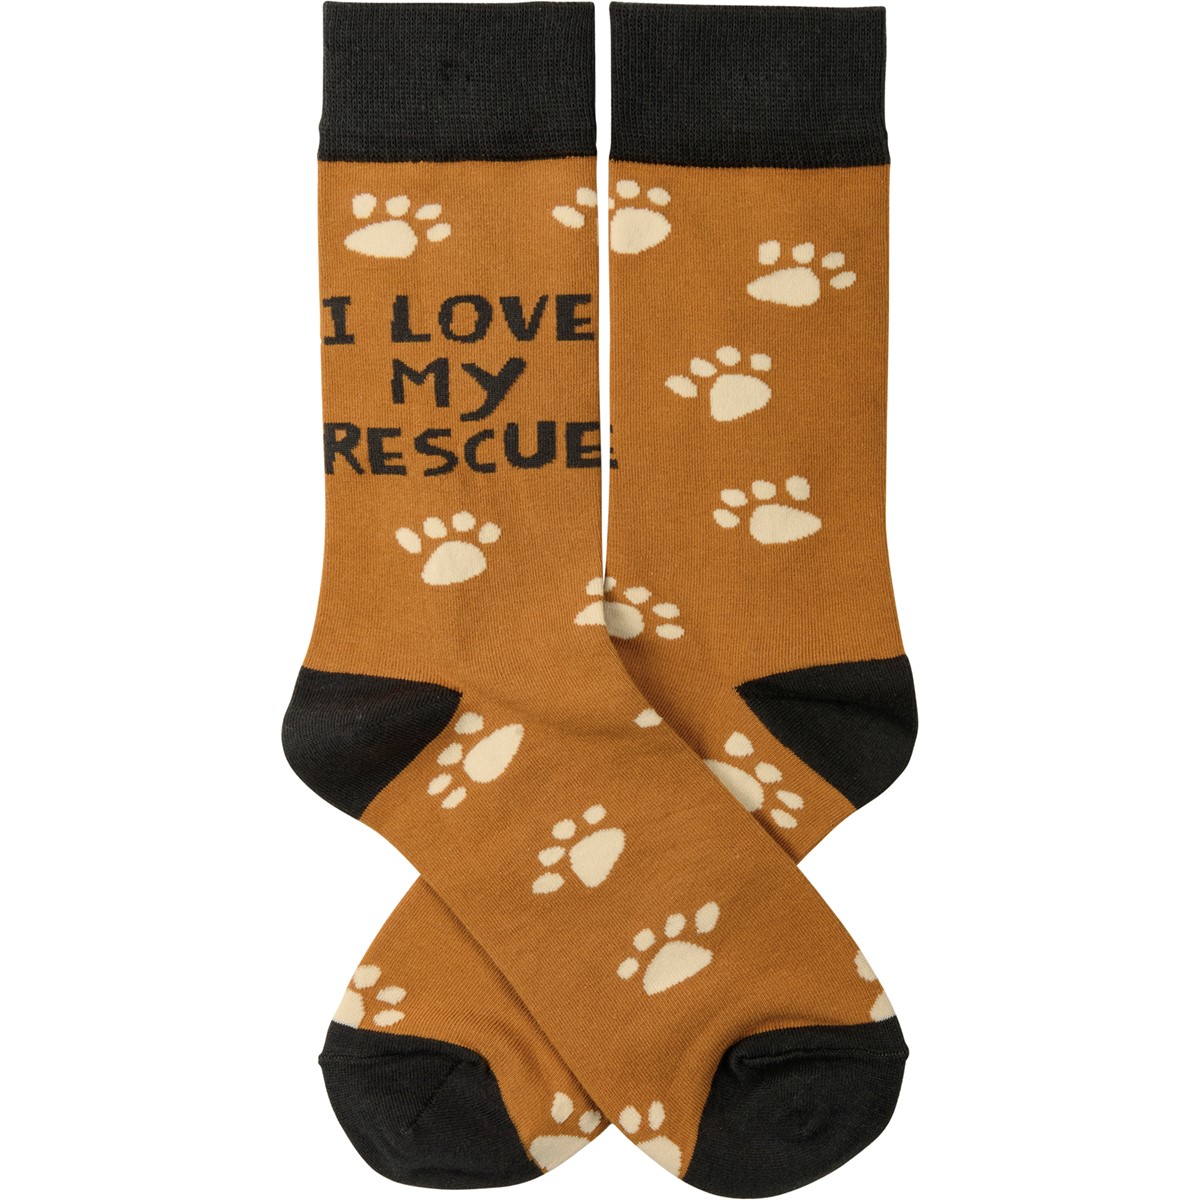 Socks - I Love My Rescue - One Size Fits Most - Cotton, Nylon, Spandex